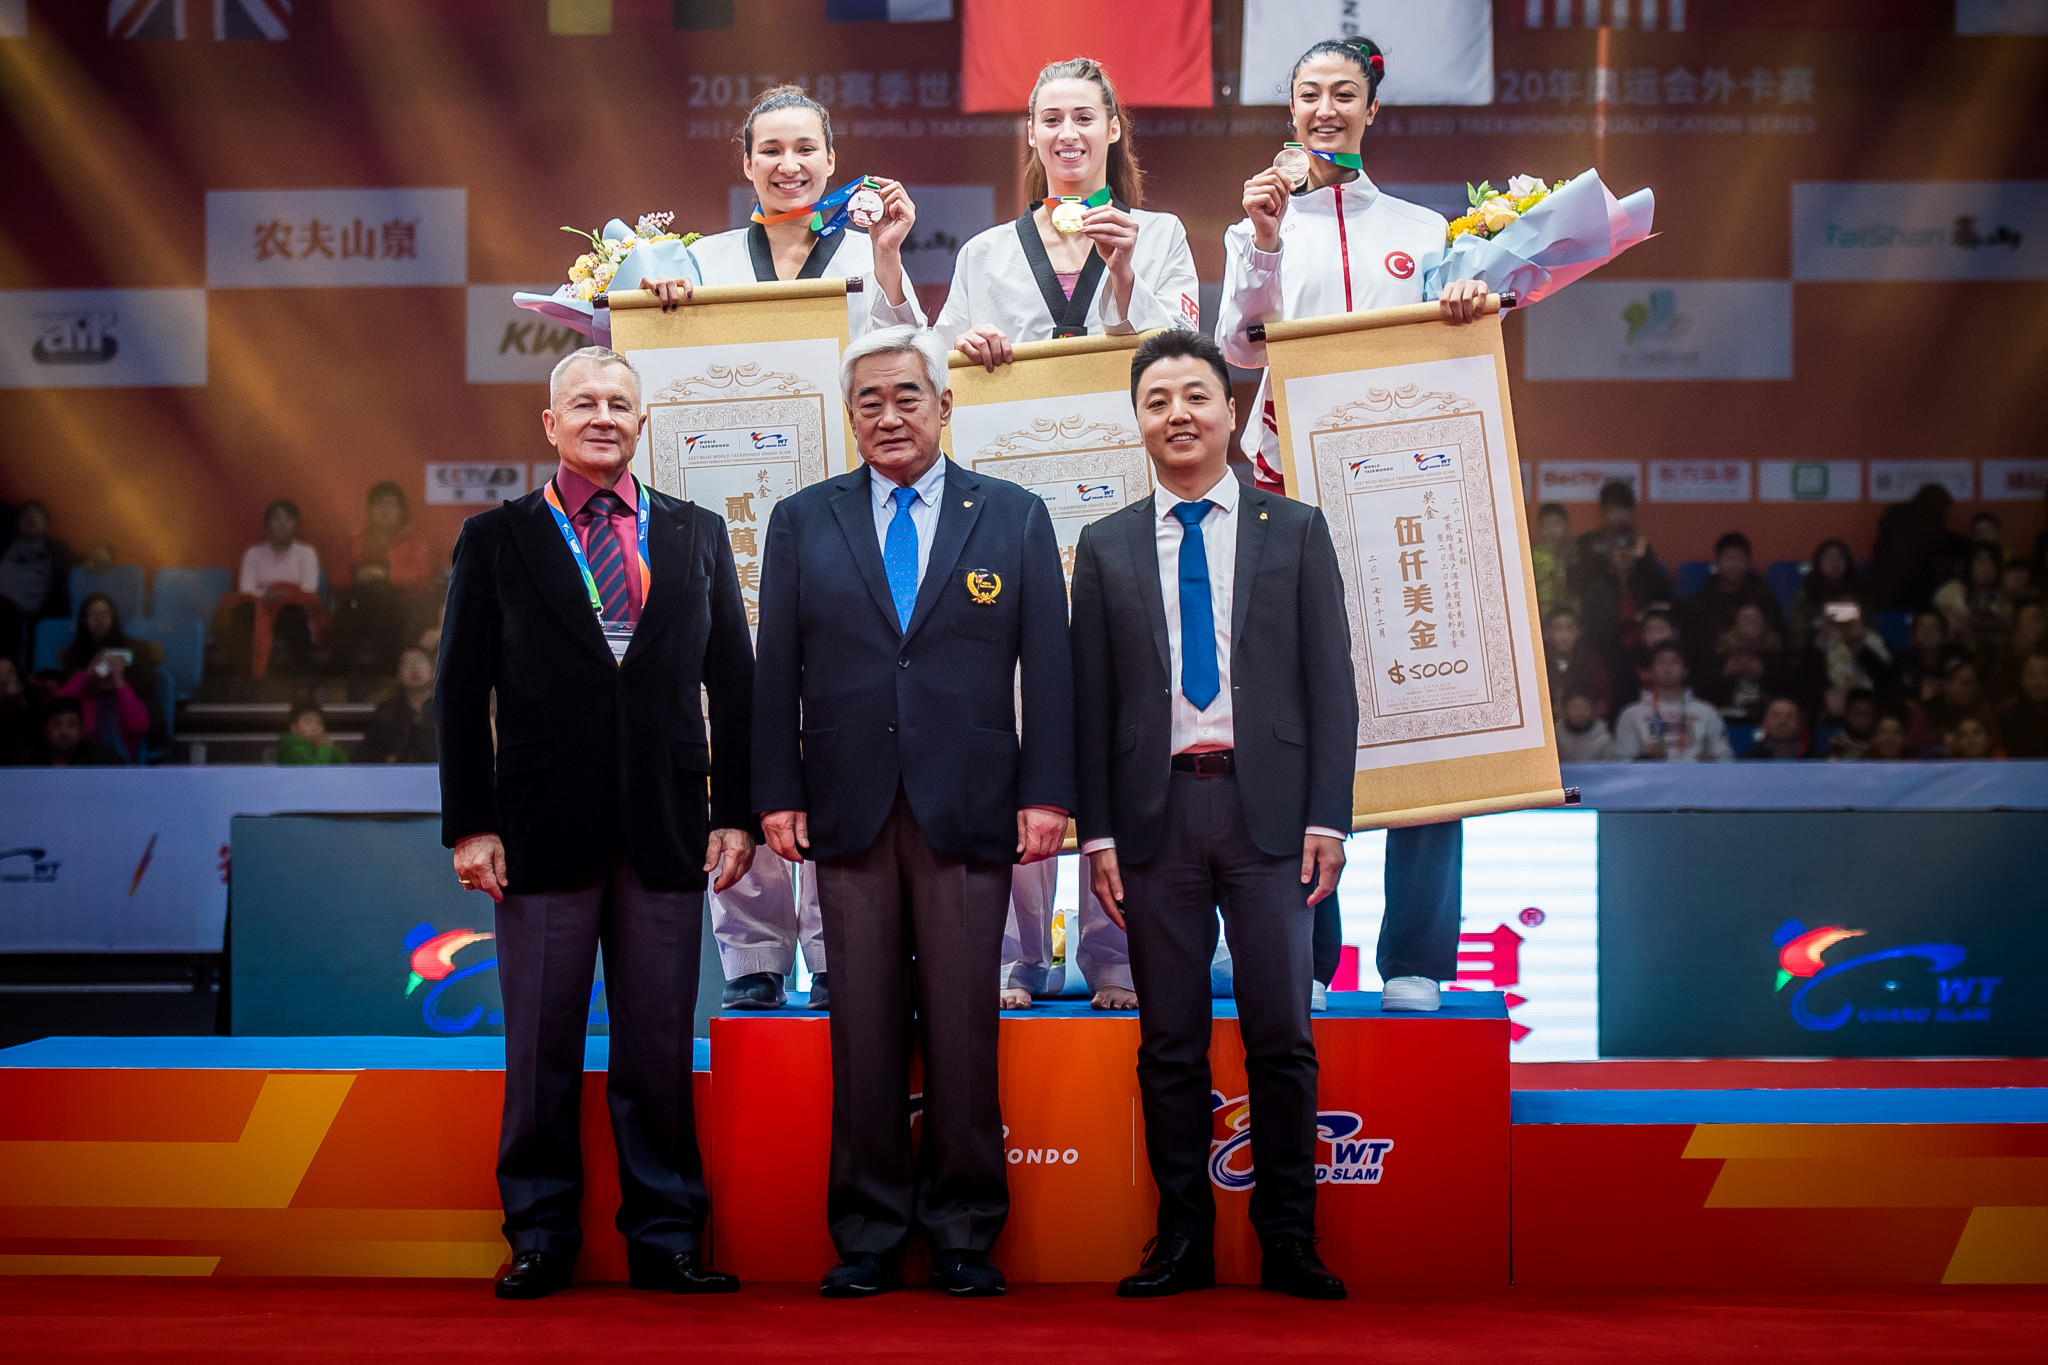 World Taekwondo President Chungwon Choue, front centre, presented the medallists with their prizes ©World Taekwondo